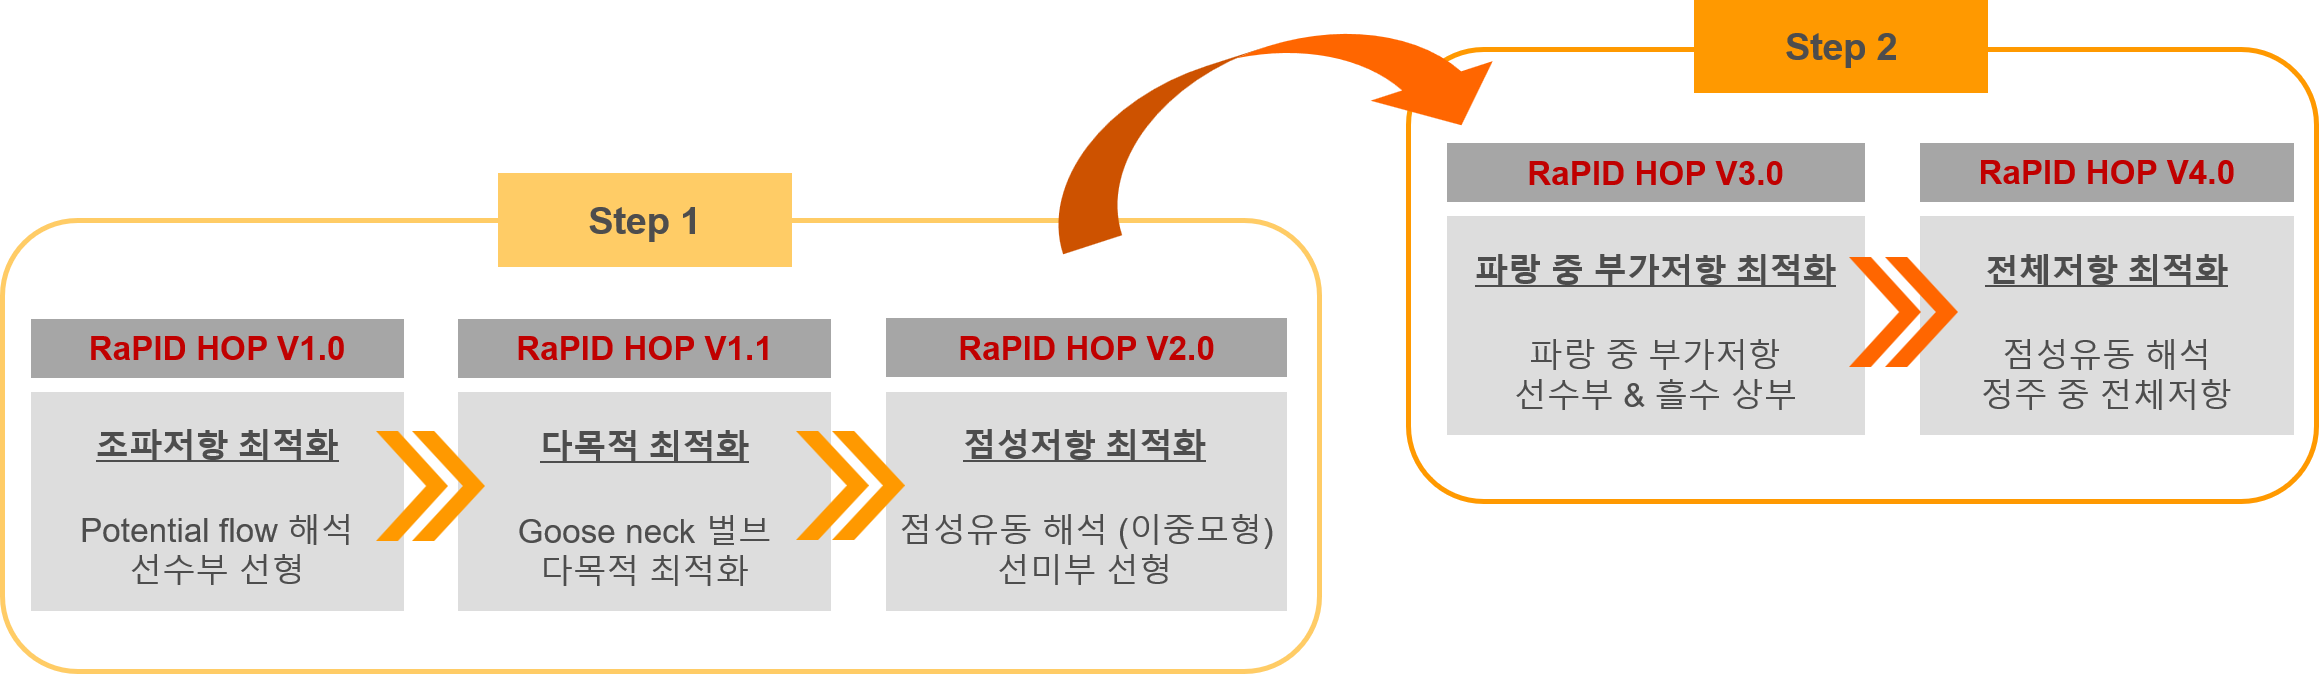 RaPID HOP 5